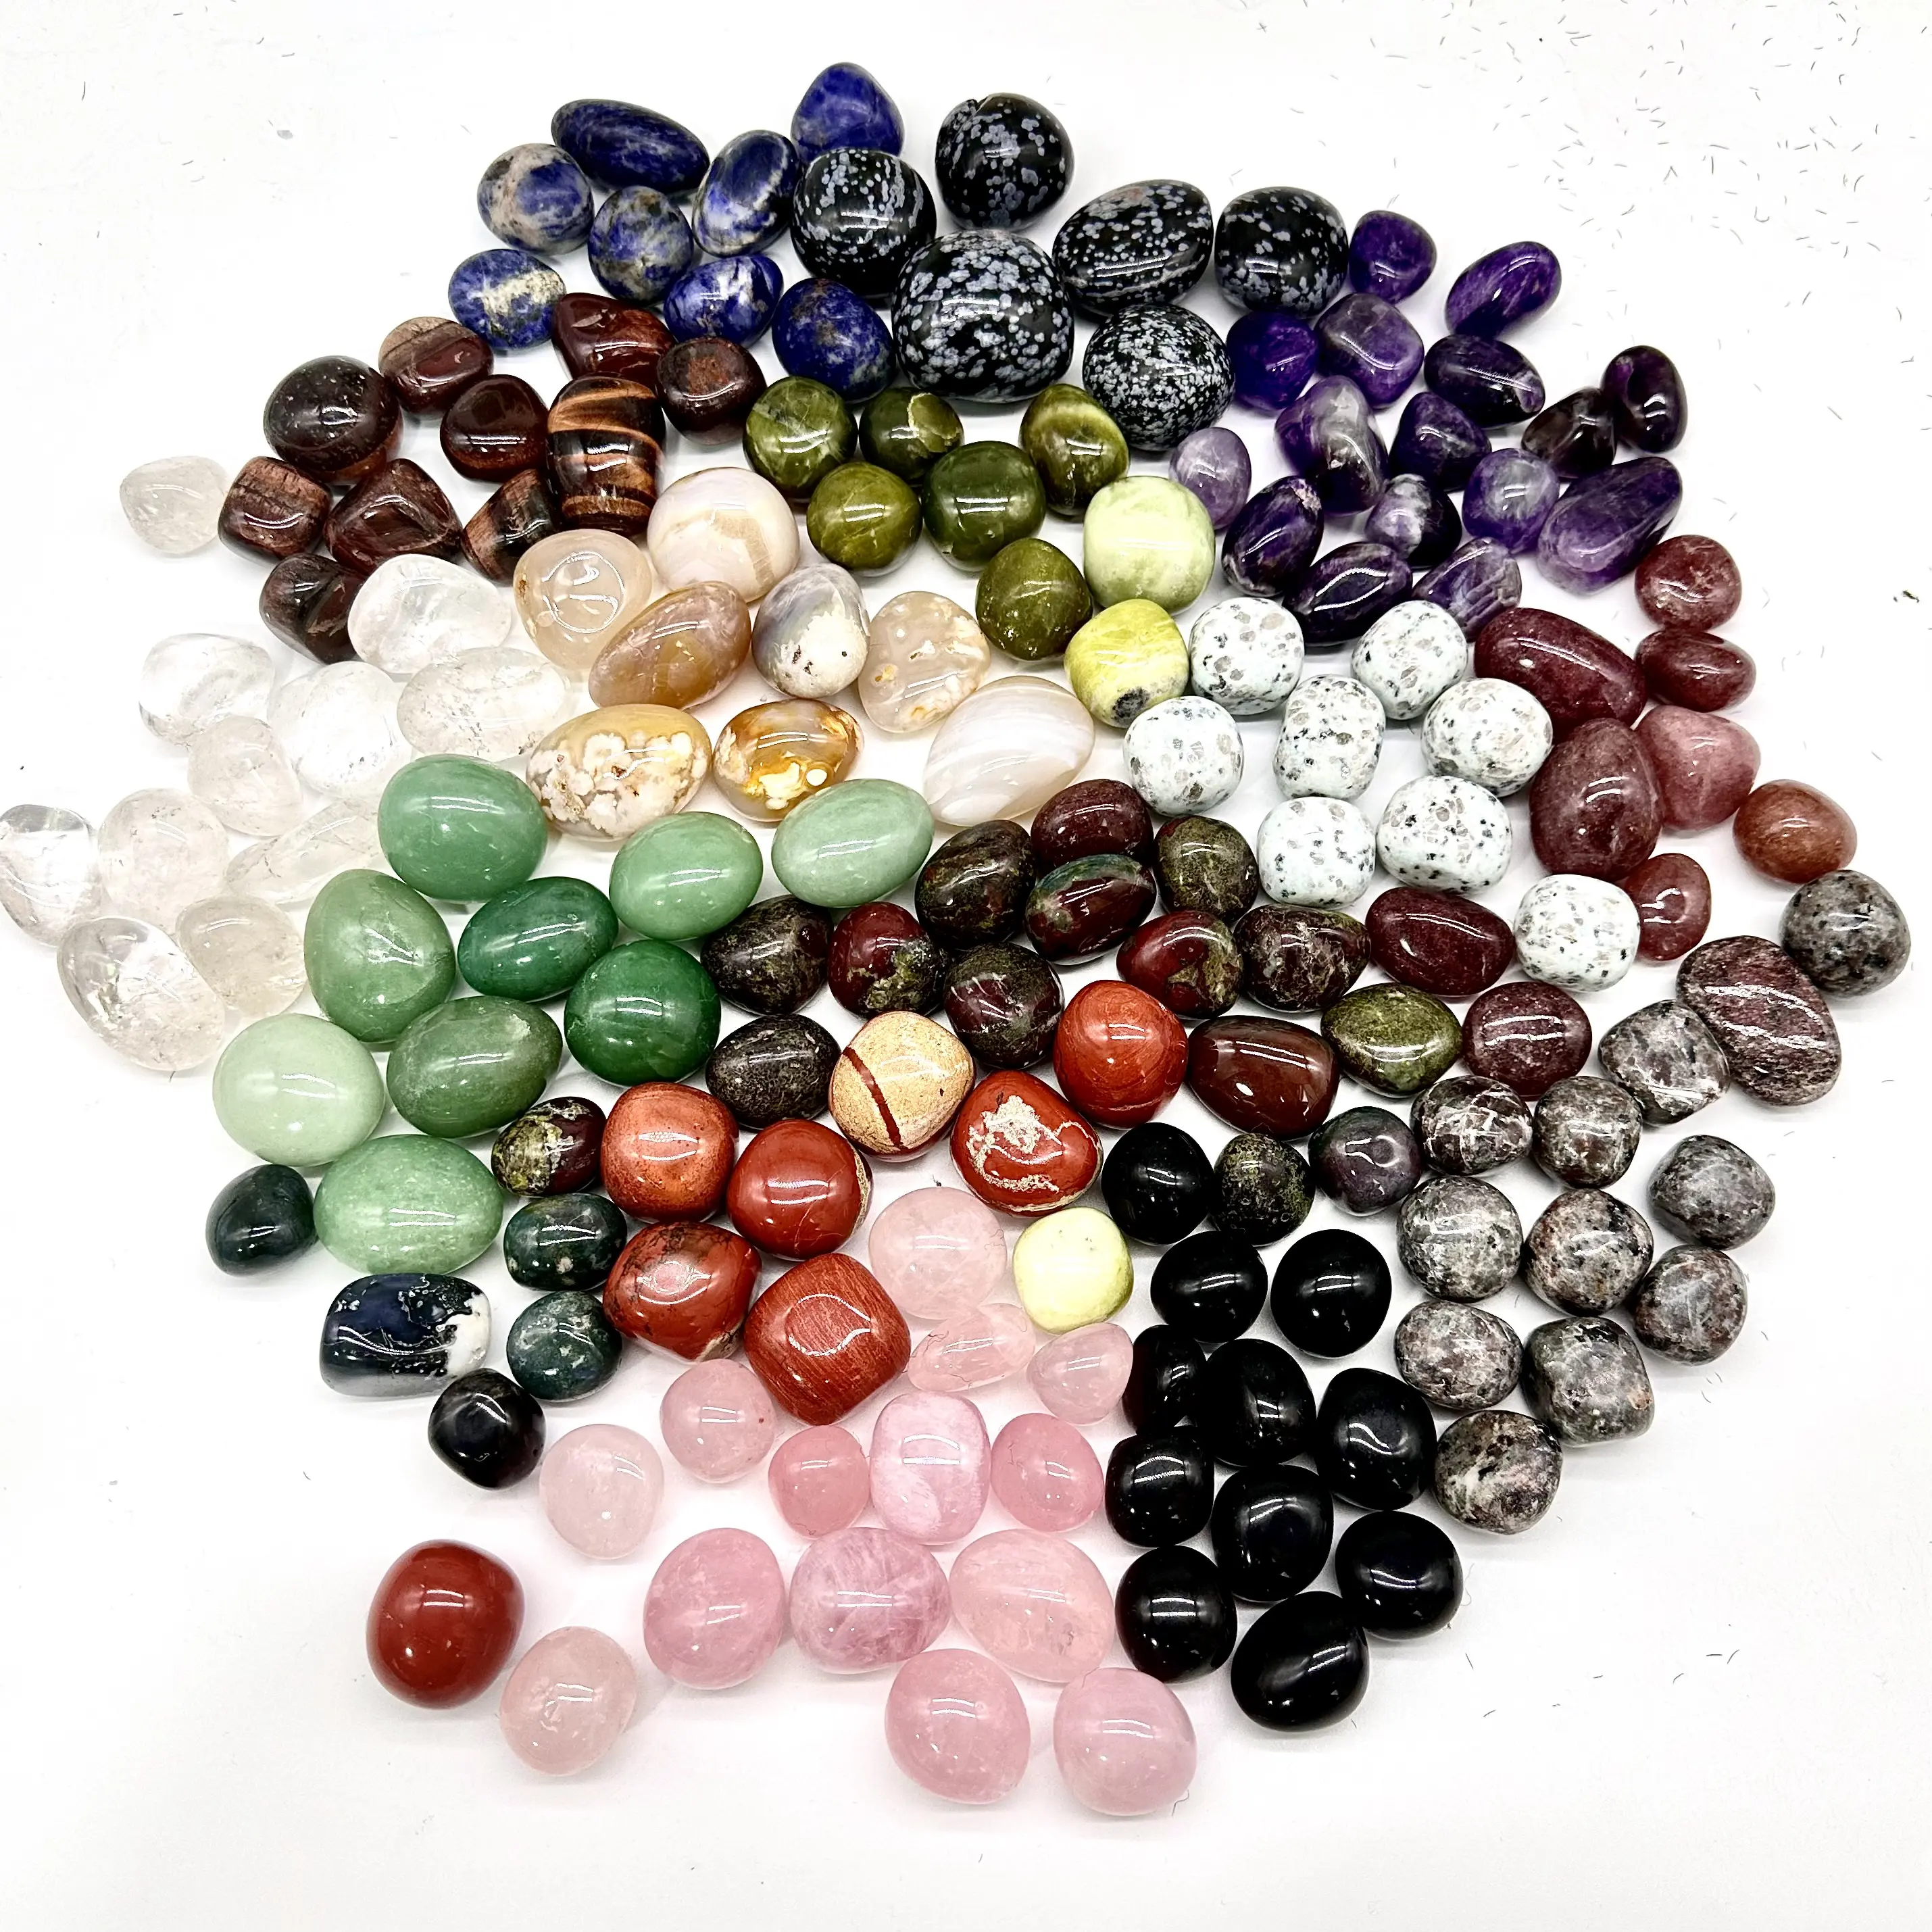 Оптовая продажа, натуральный хрустальный камень, различные драгоценные камни, камень, аметист, кристалл, цветок, агат, розовый кварц